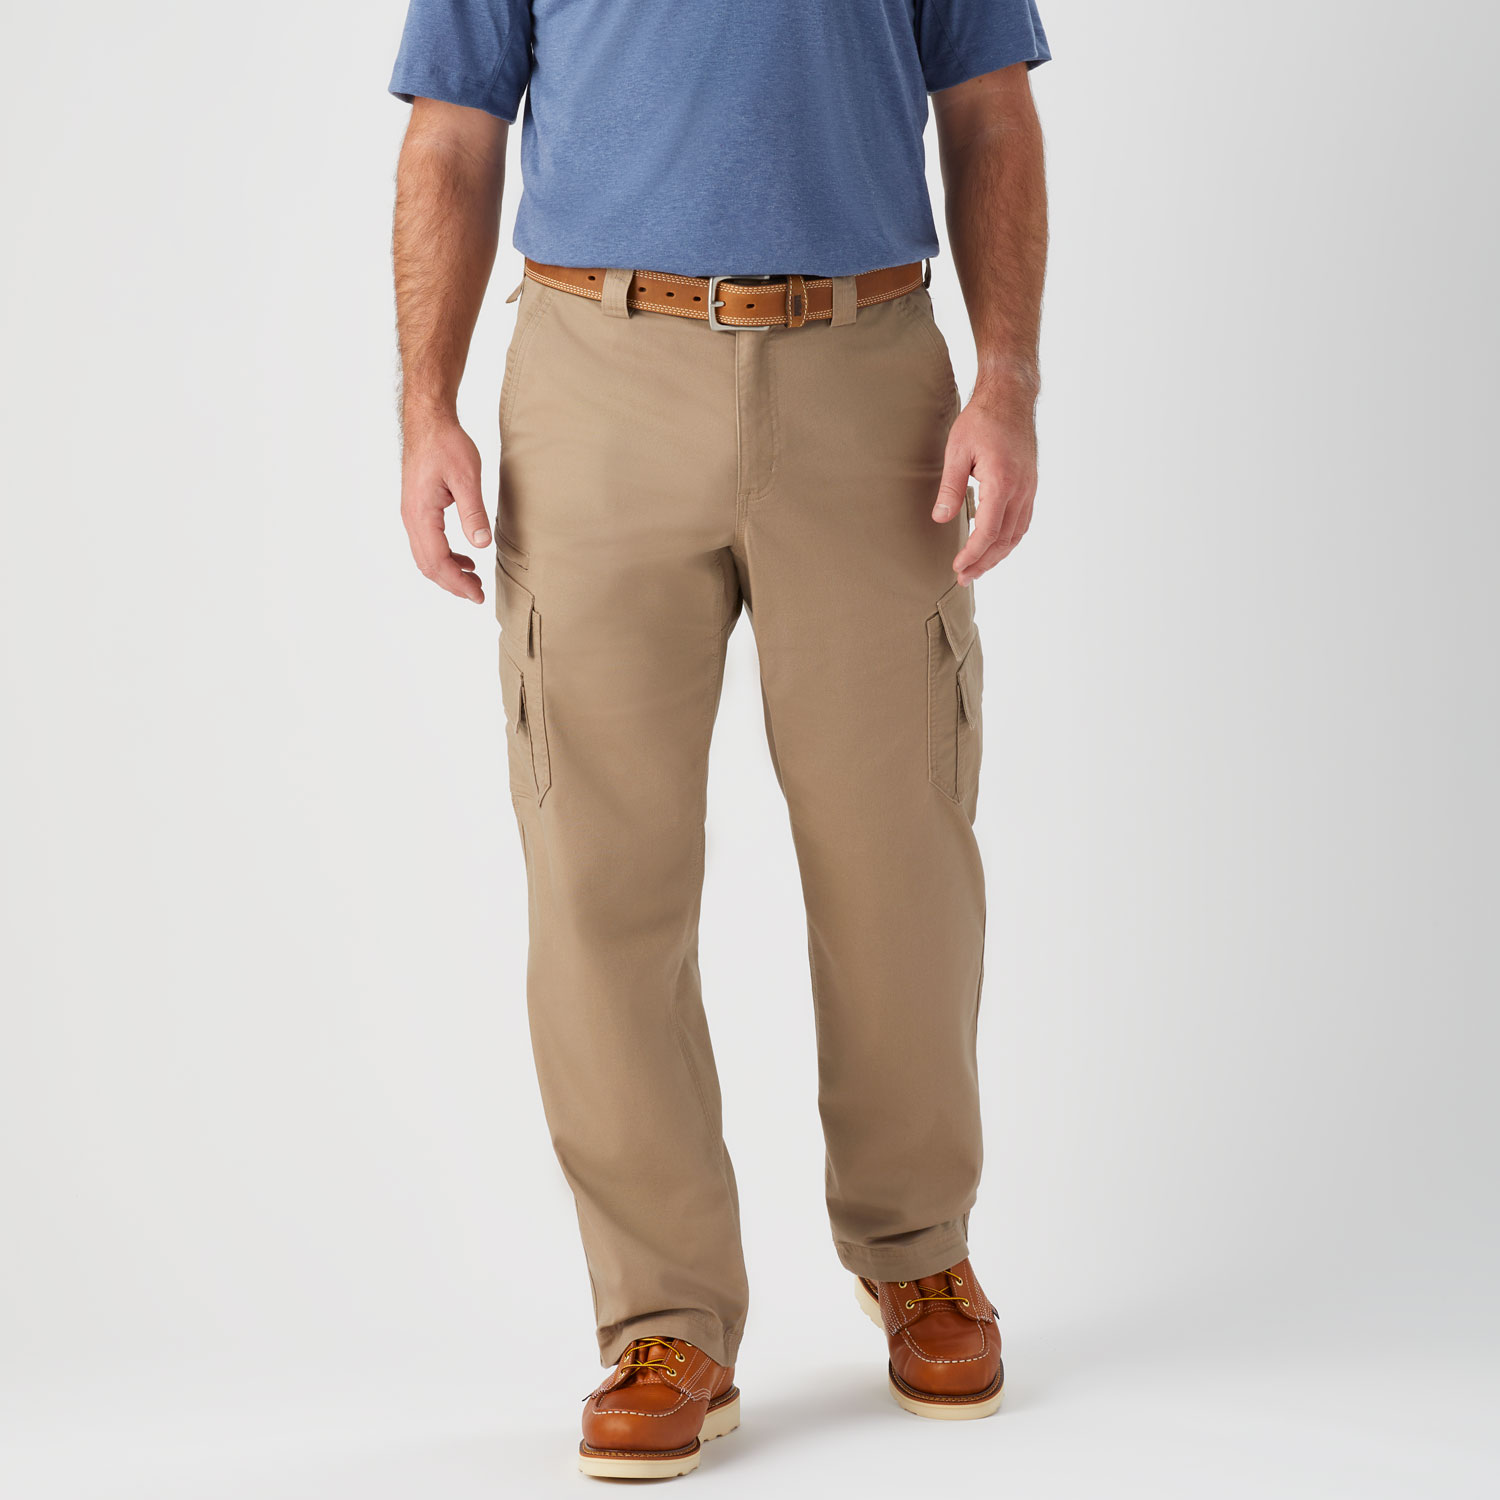 Men's DuluthFlex Sweat Management Relaxed Fit Cargo Pants